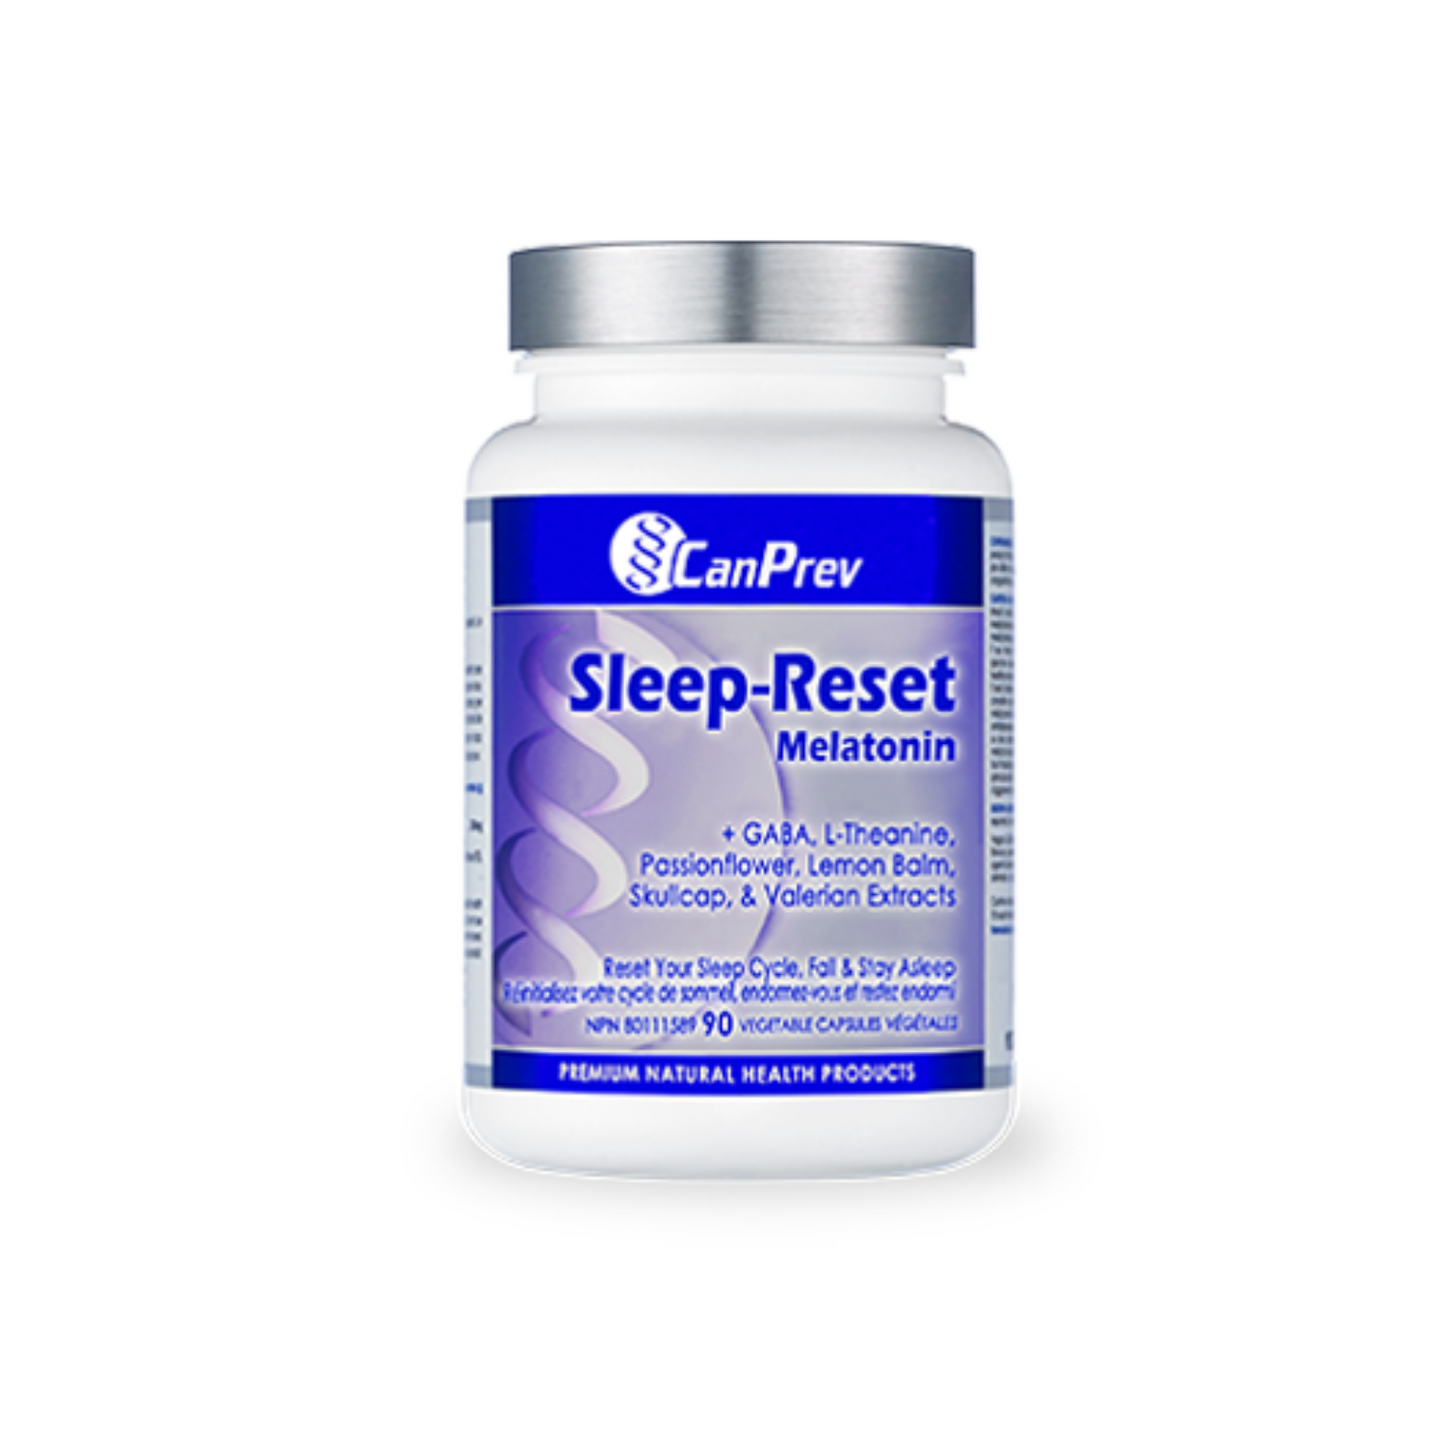 CanPrev Sleep Reset